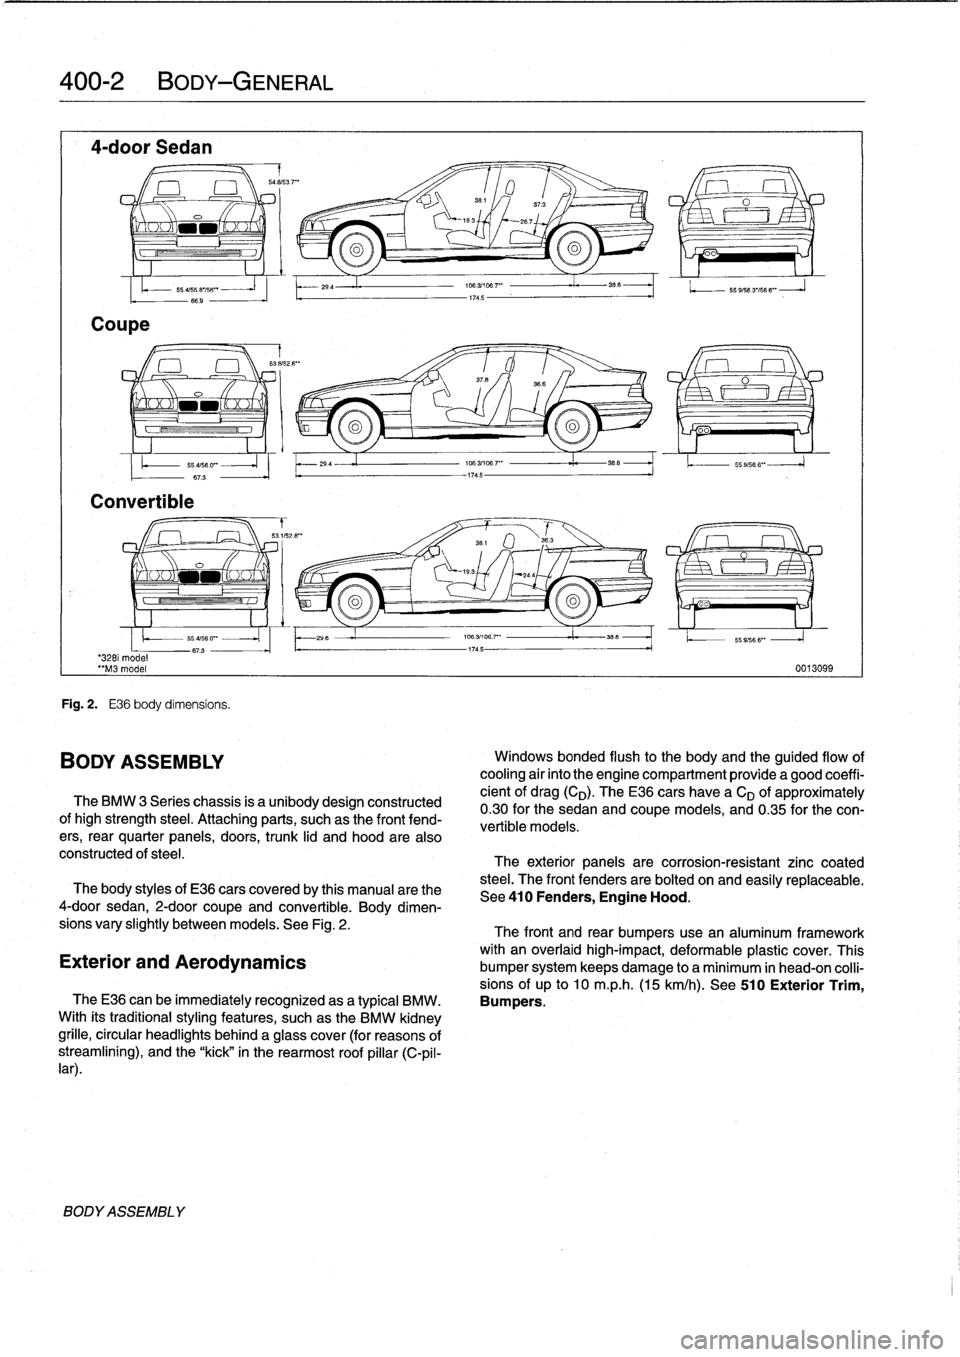 BMW 318i 1998 E36 Workshop Manual 
400-2
BODY-GENERAL

4-door
Sedan

Coupe

-
saas3
.7""

351
/

	

37
.3
O

	

I
x
`-193

	

267

o
oa

3281
model
"M3
model

Convertible

BODYASSEMBLY

55
ass
.e
iss
""
-
66
.9
-

Fig
.
2
.

	

E36
b